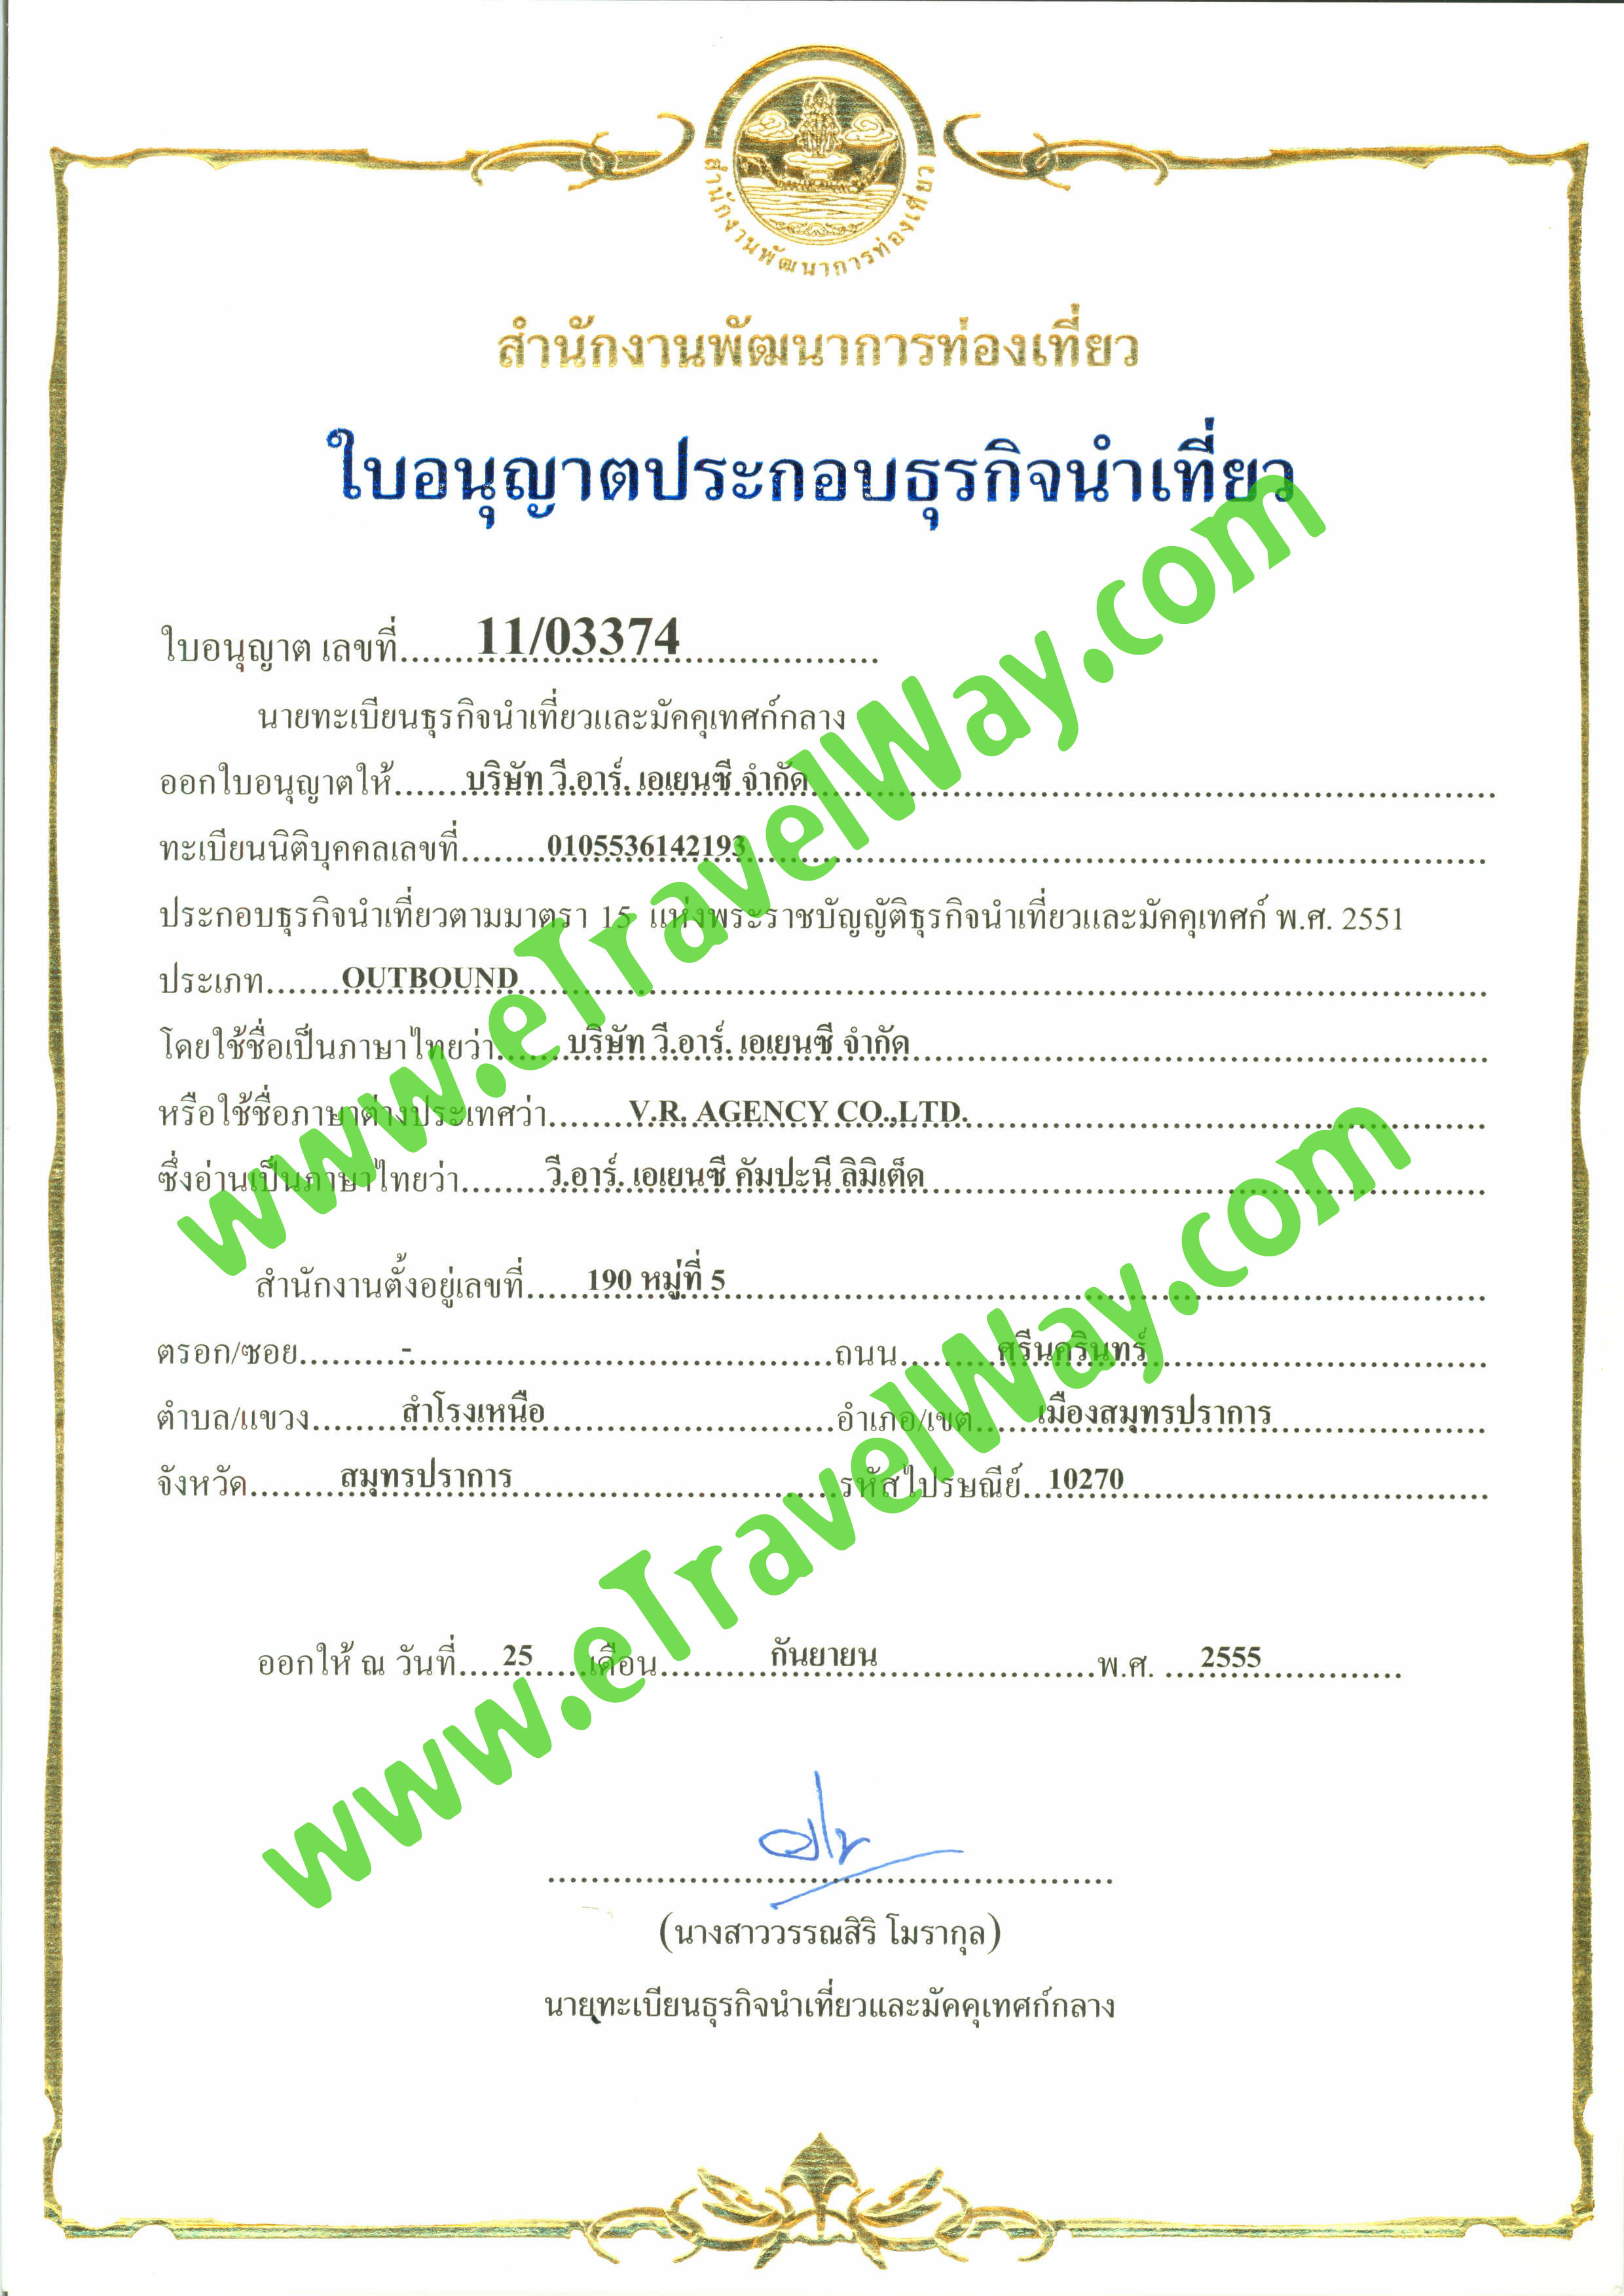 TAT Travel License No. 11/03374